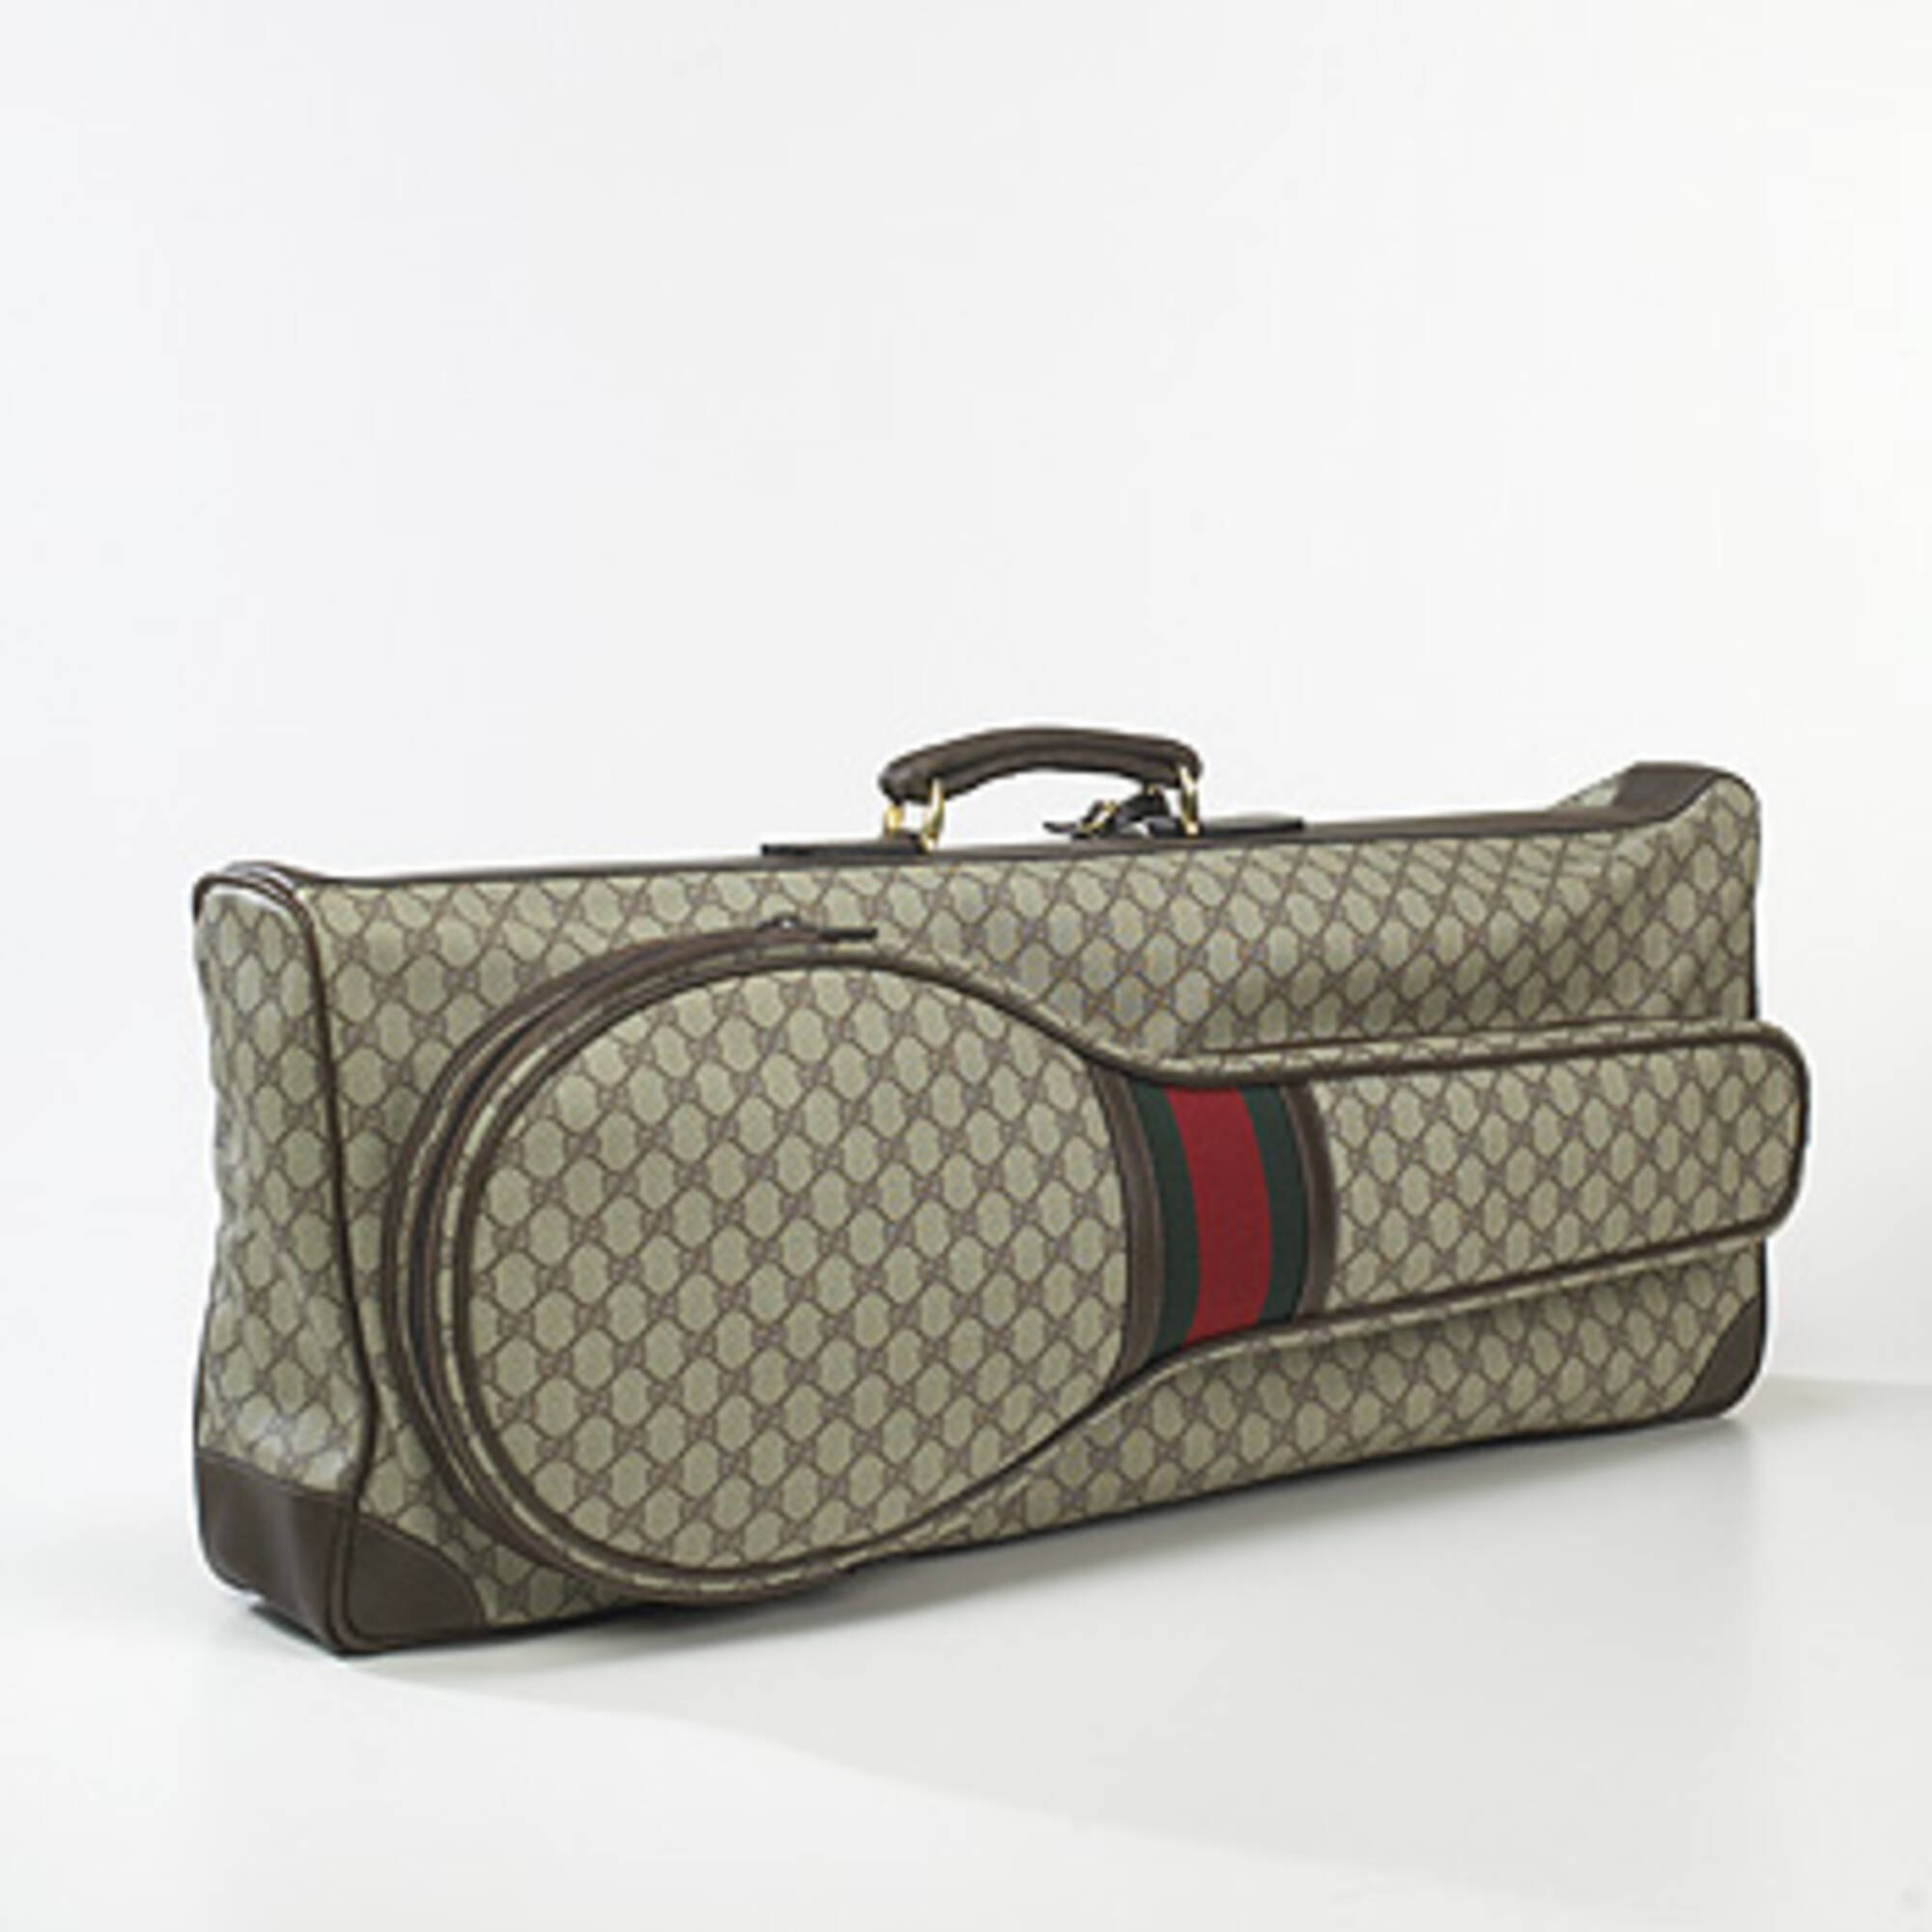 483: GUCCI, tennis bag \u003c Branded Luxury 